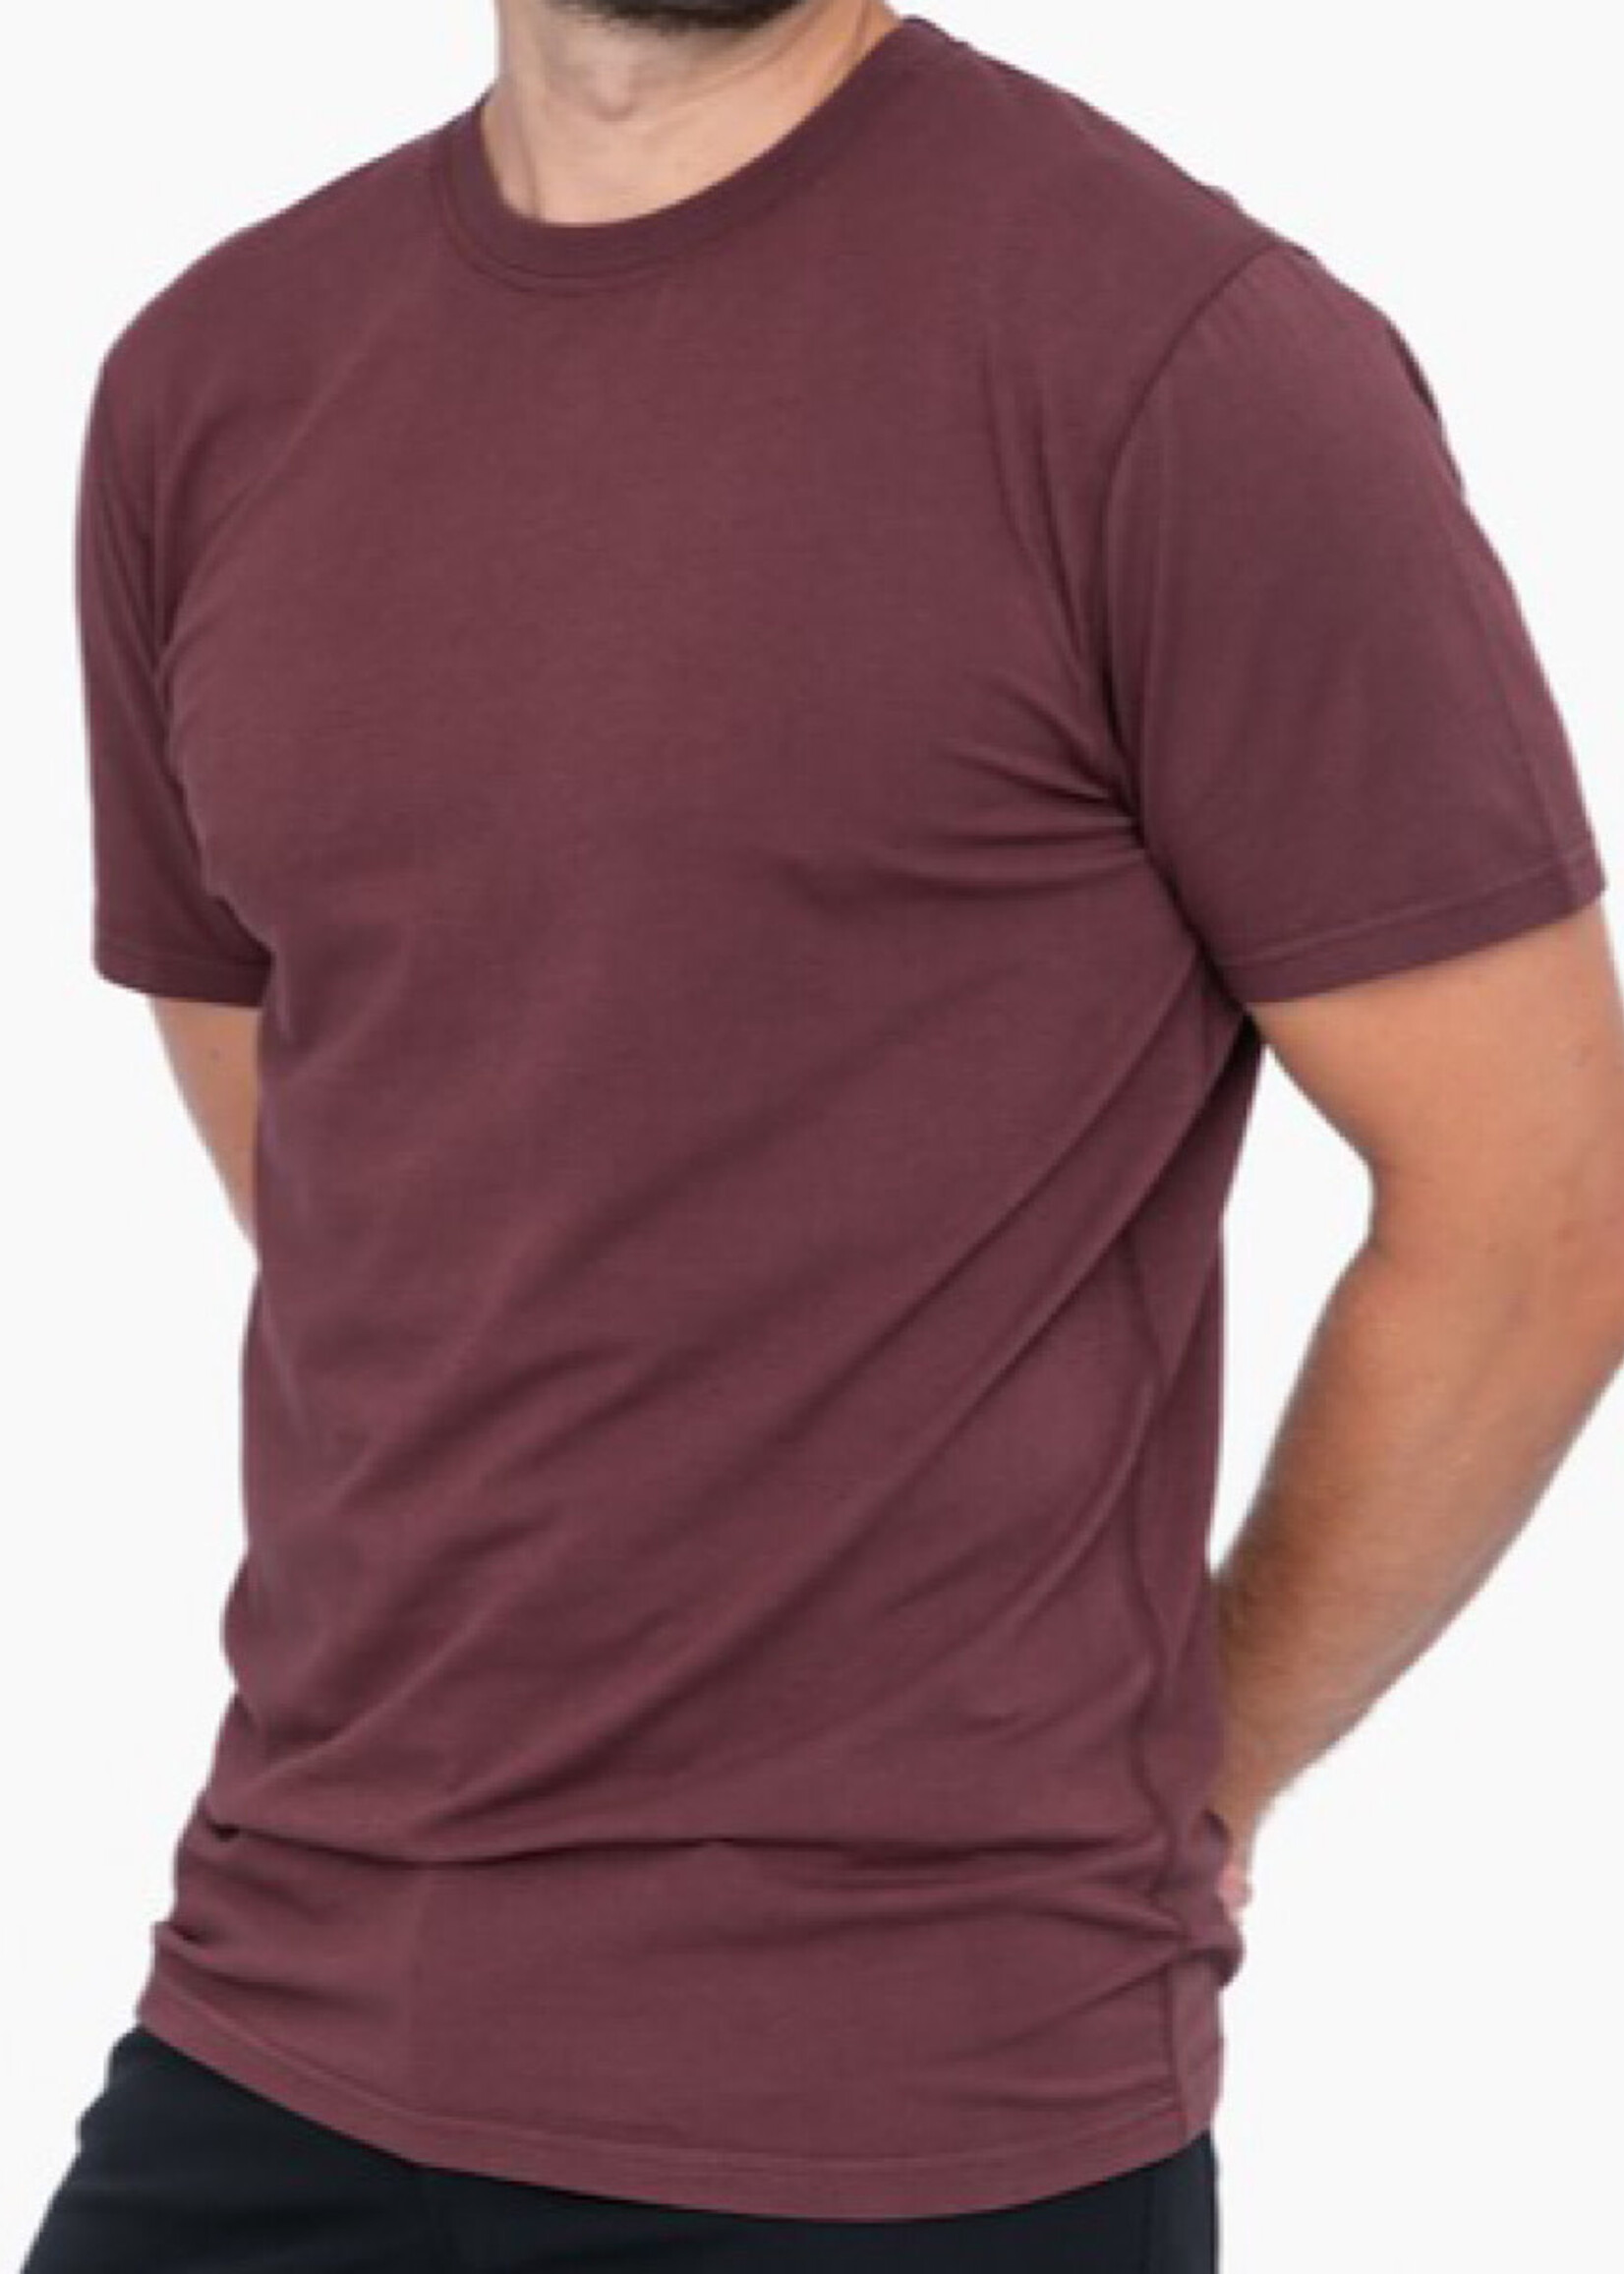 Men's Burgundy Pima Cotton Blend Short Sleeve Top